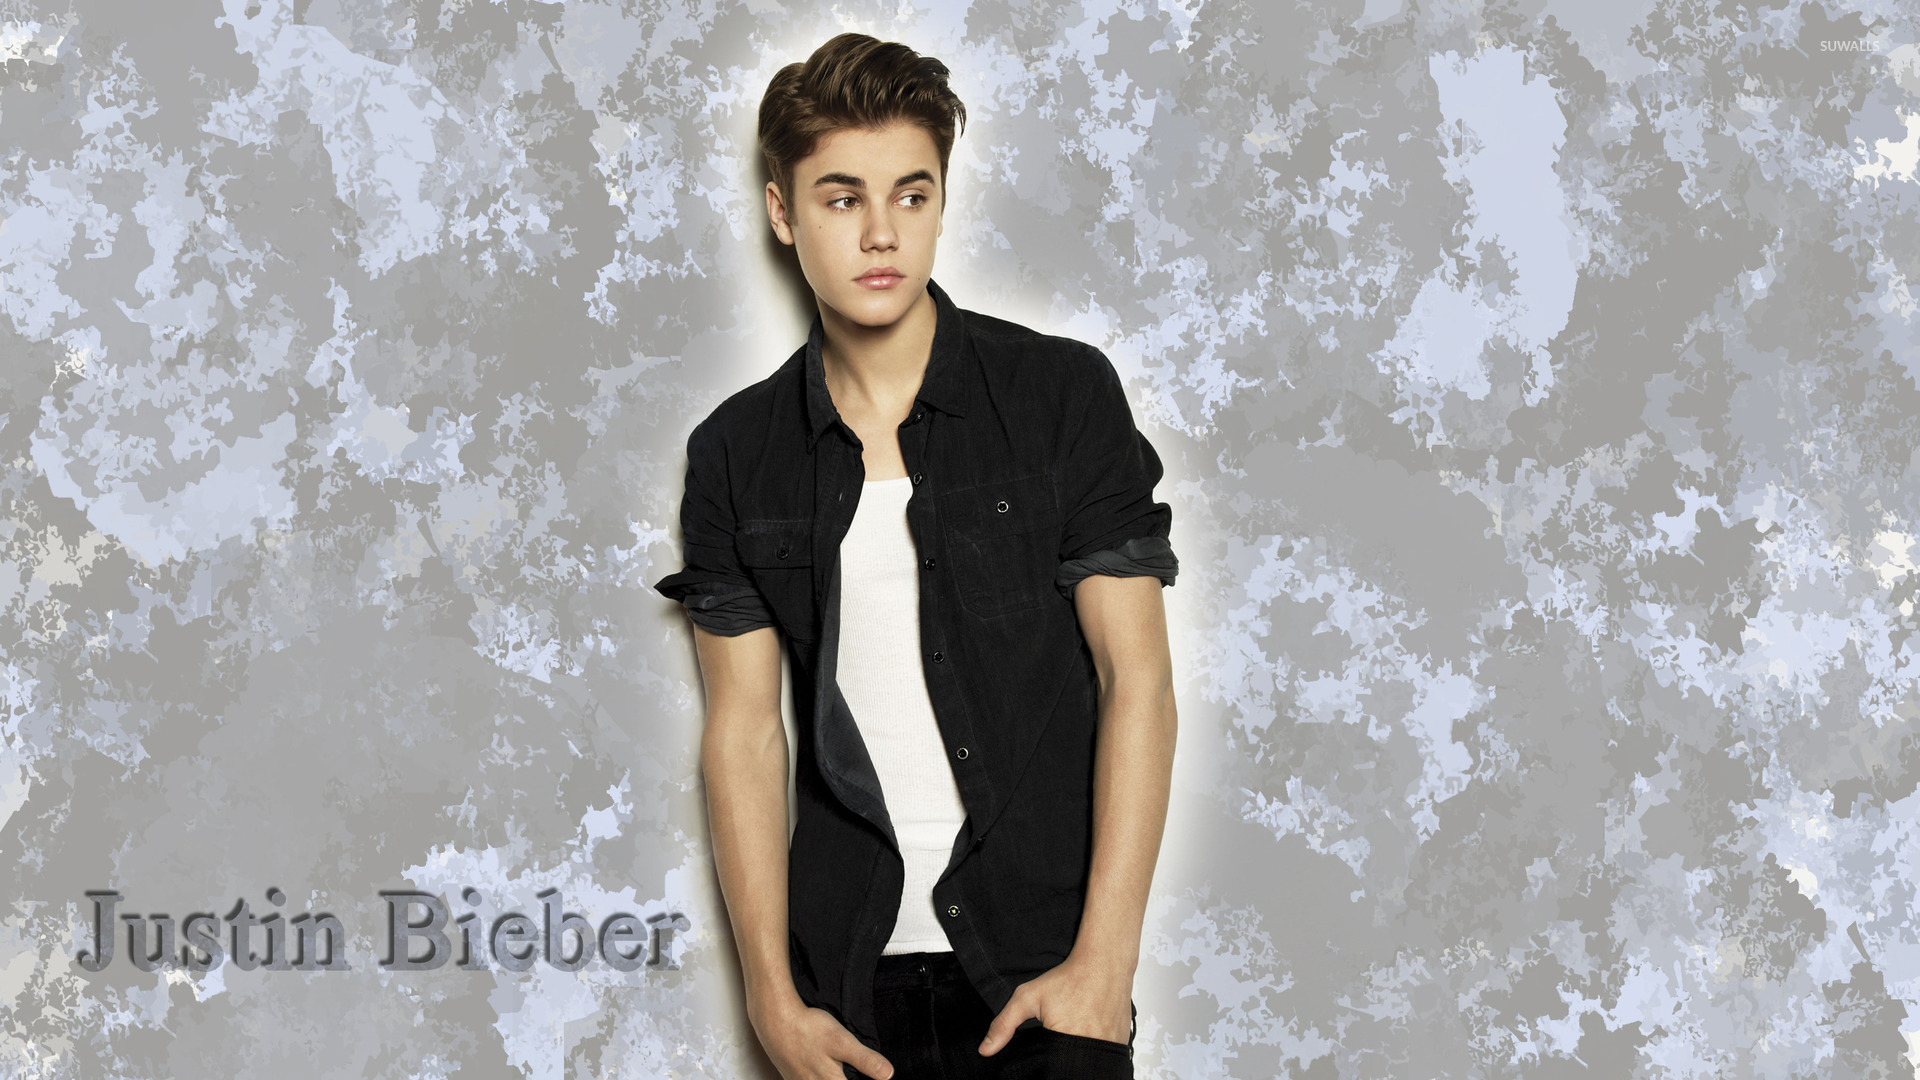 Justin Bieber wallpaper   Male celebrity wallpapers   17182